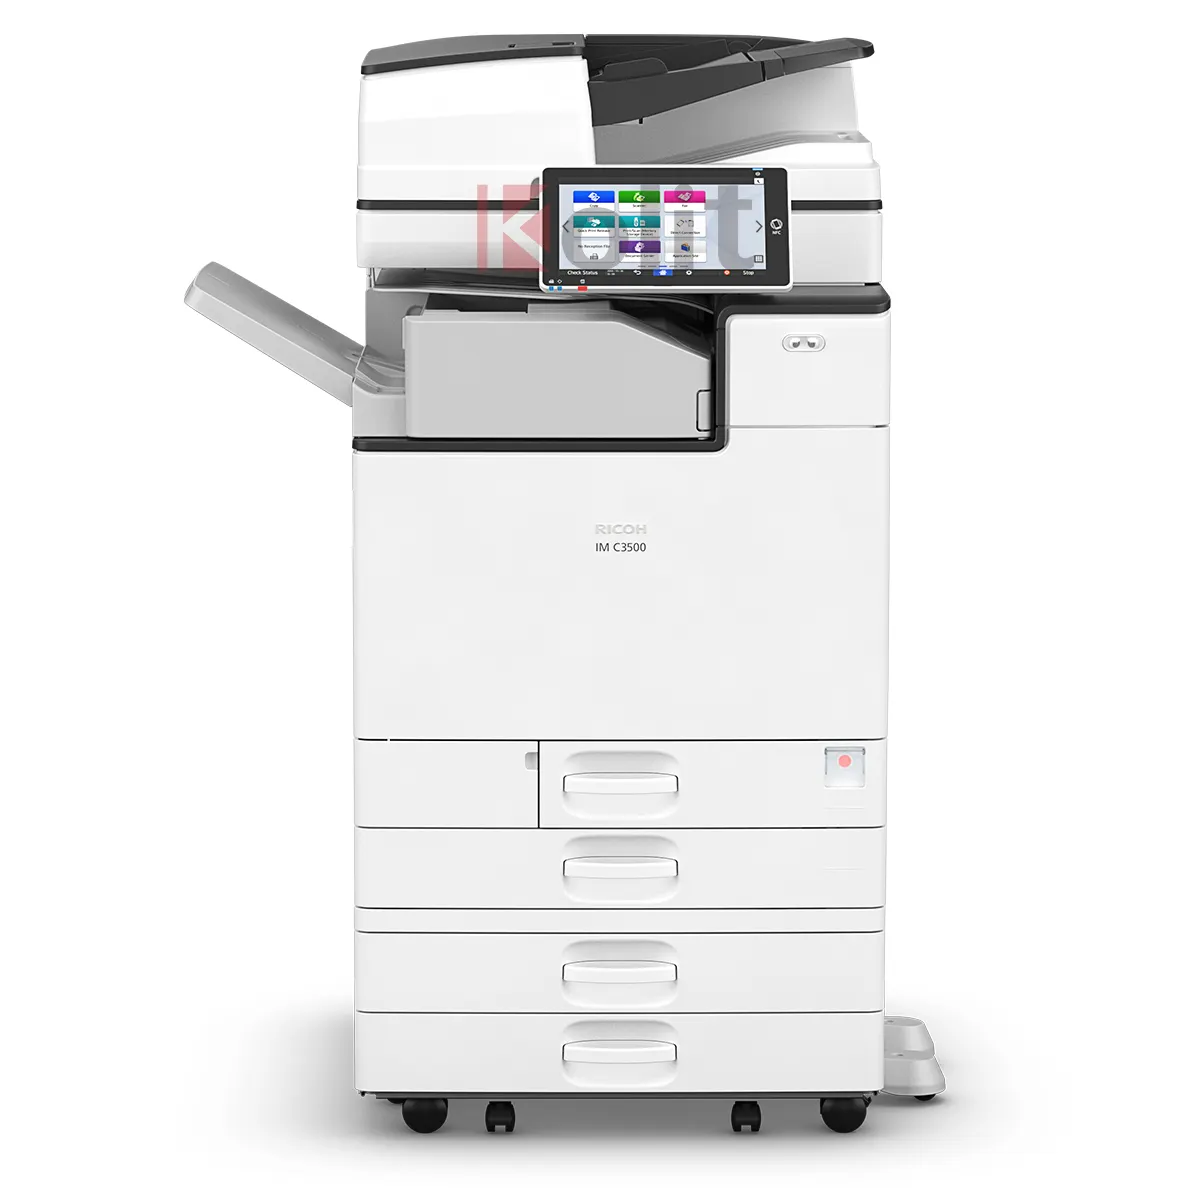 Brand New Alta qualidade IMC3500 Fotocopiadora Dedicado Copiadora Rentals Printer Scanner A3 Copiadora a cores